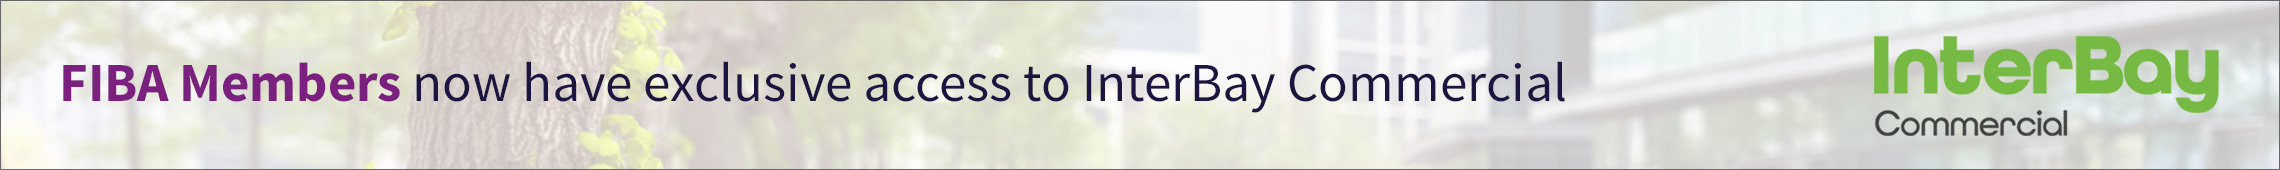 Interbay Commercial for FIBA Members